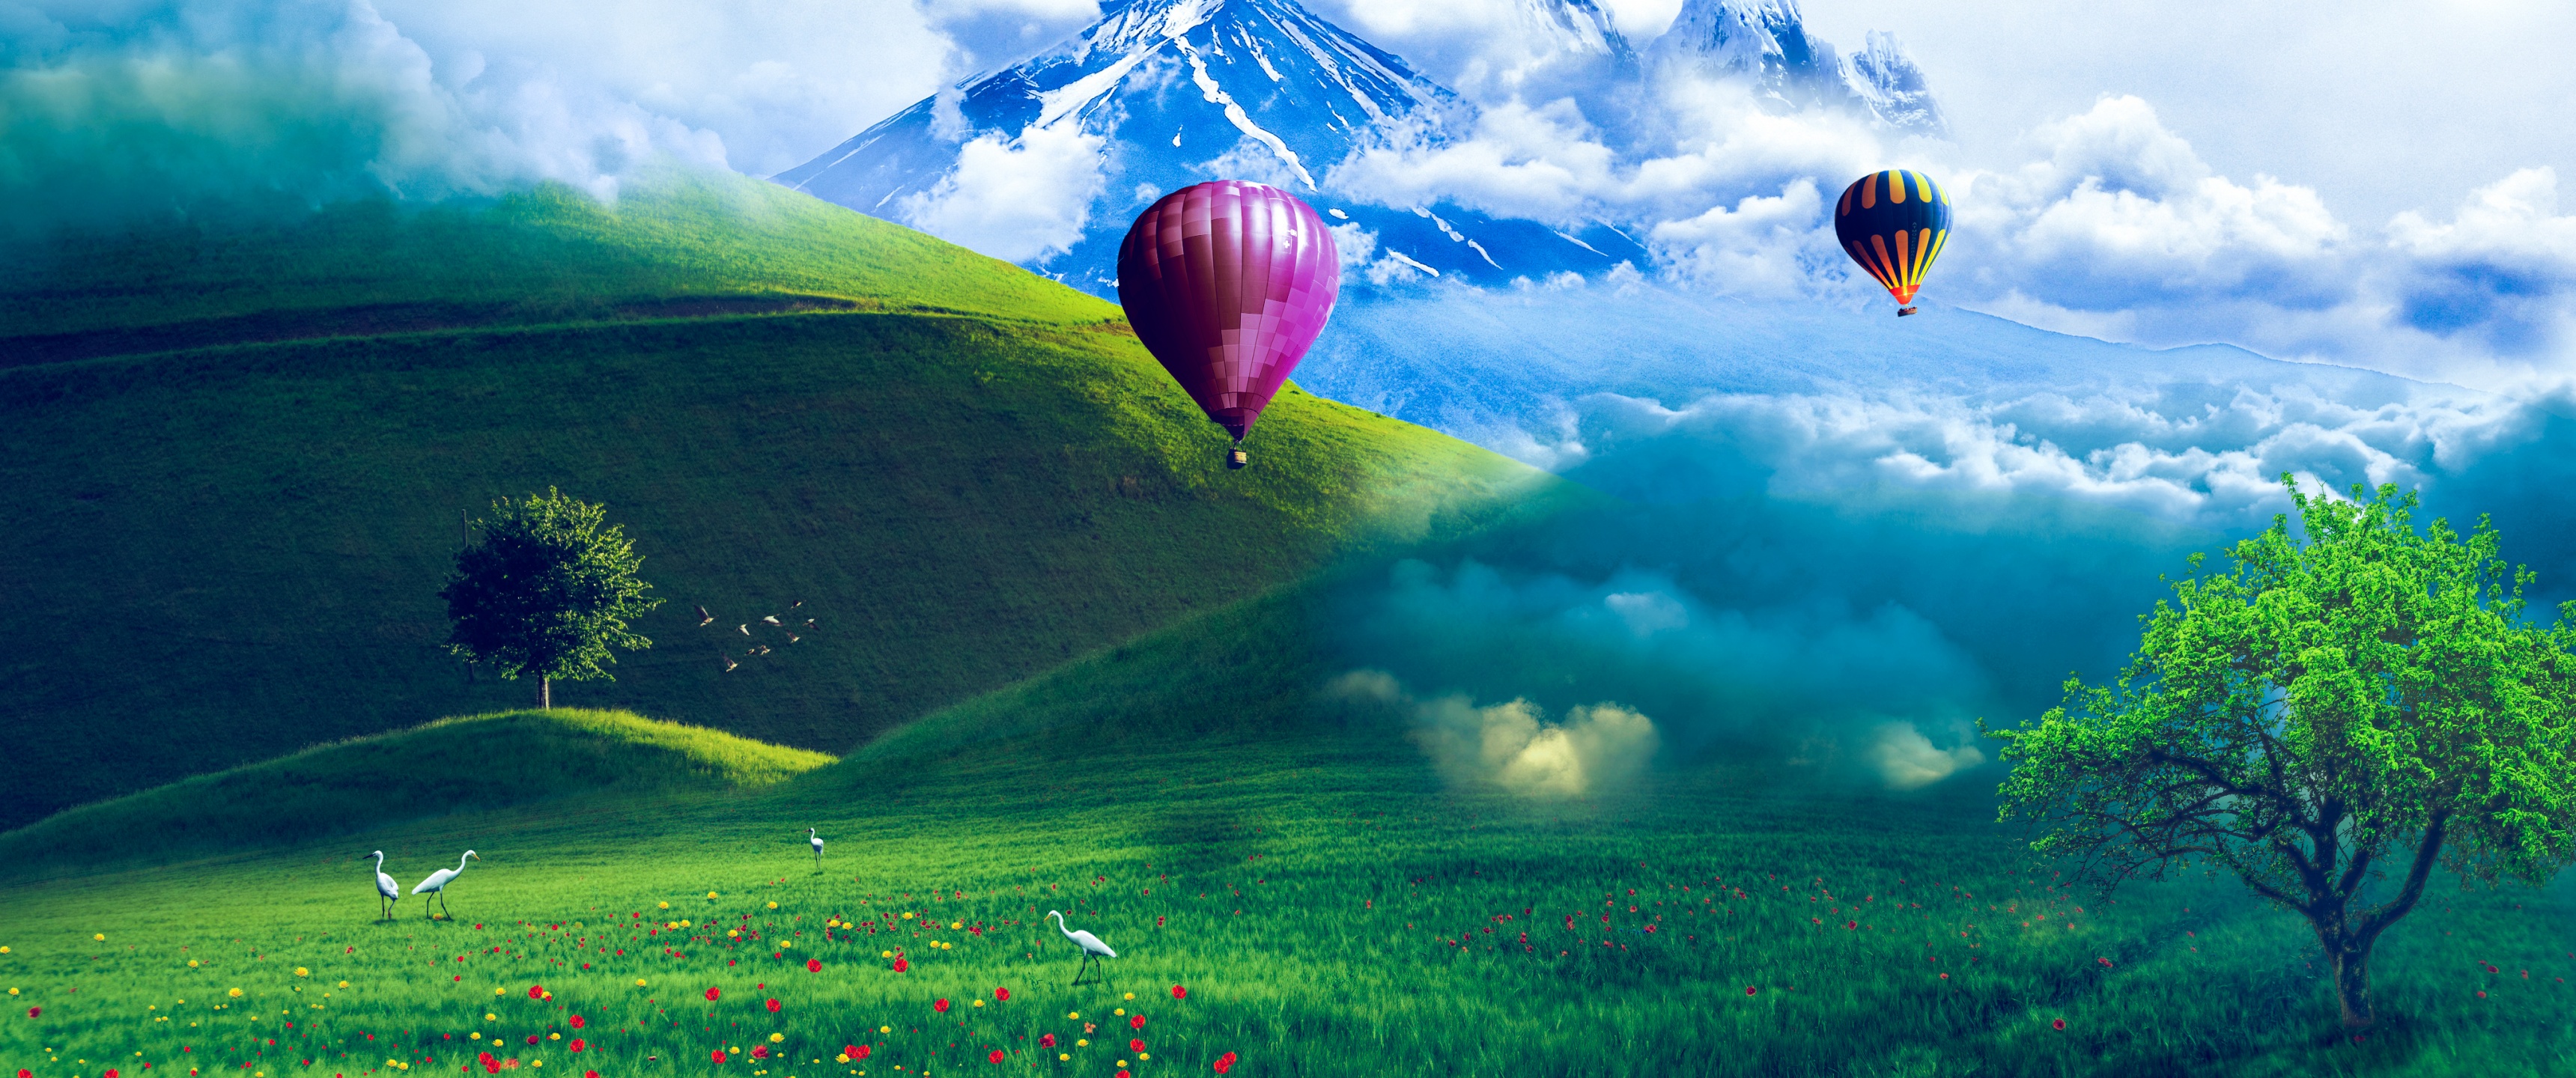 Hot air balloons Wallpaper 4K, Scenery, Landscape, Greenery